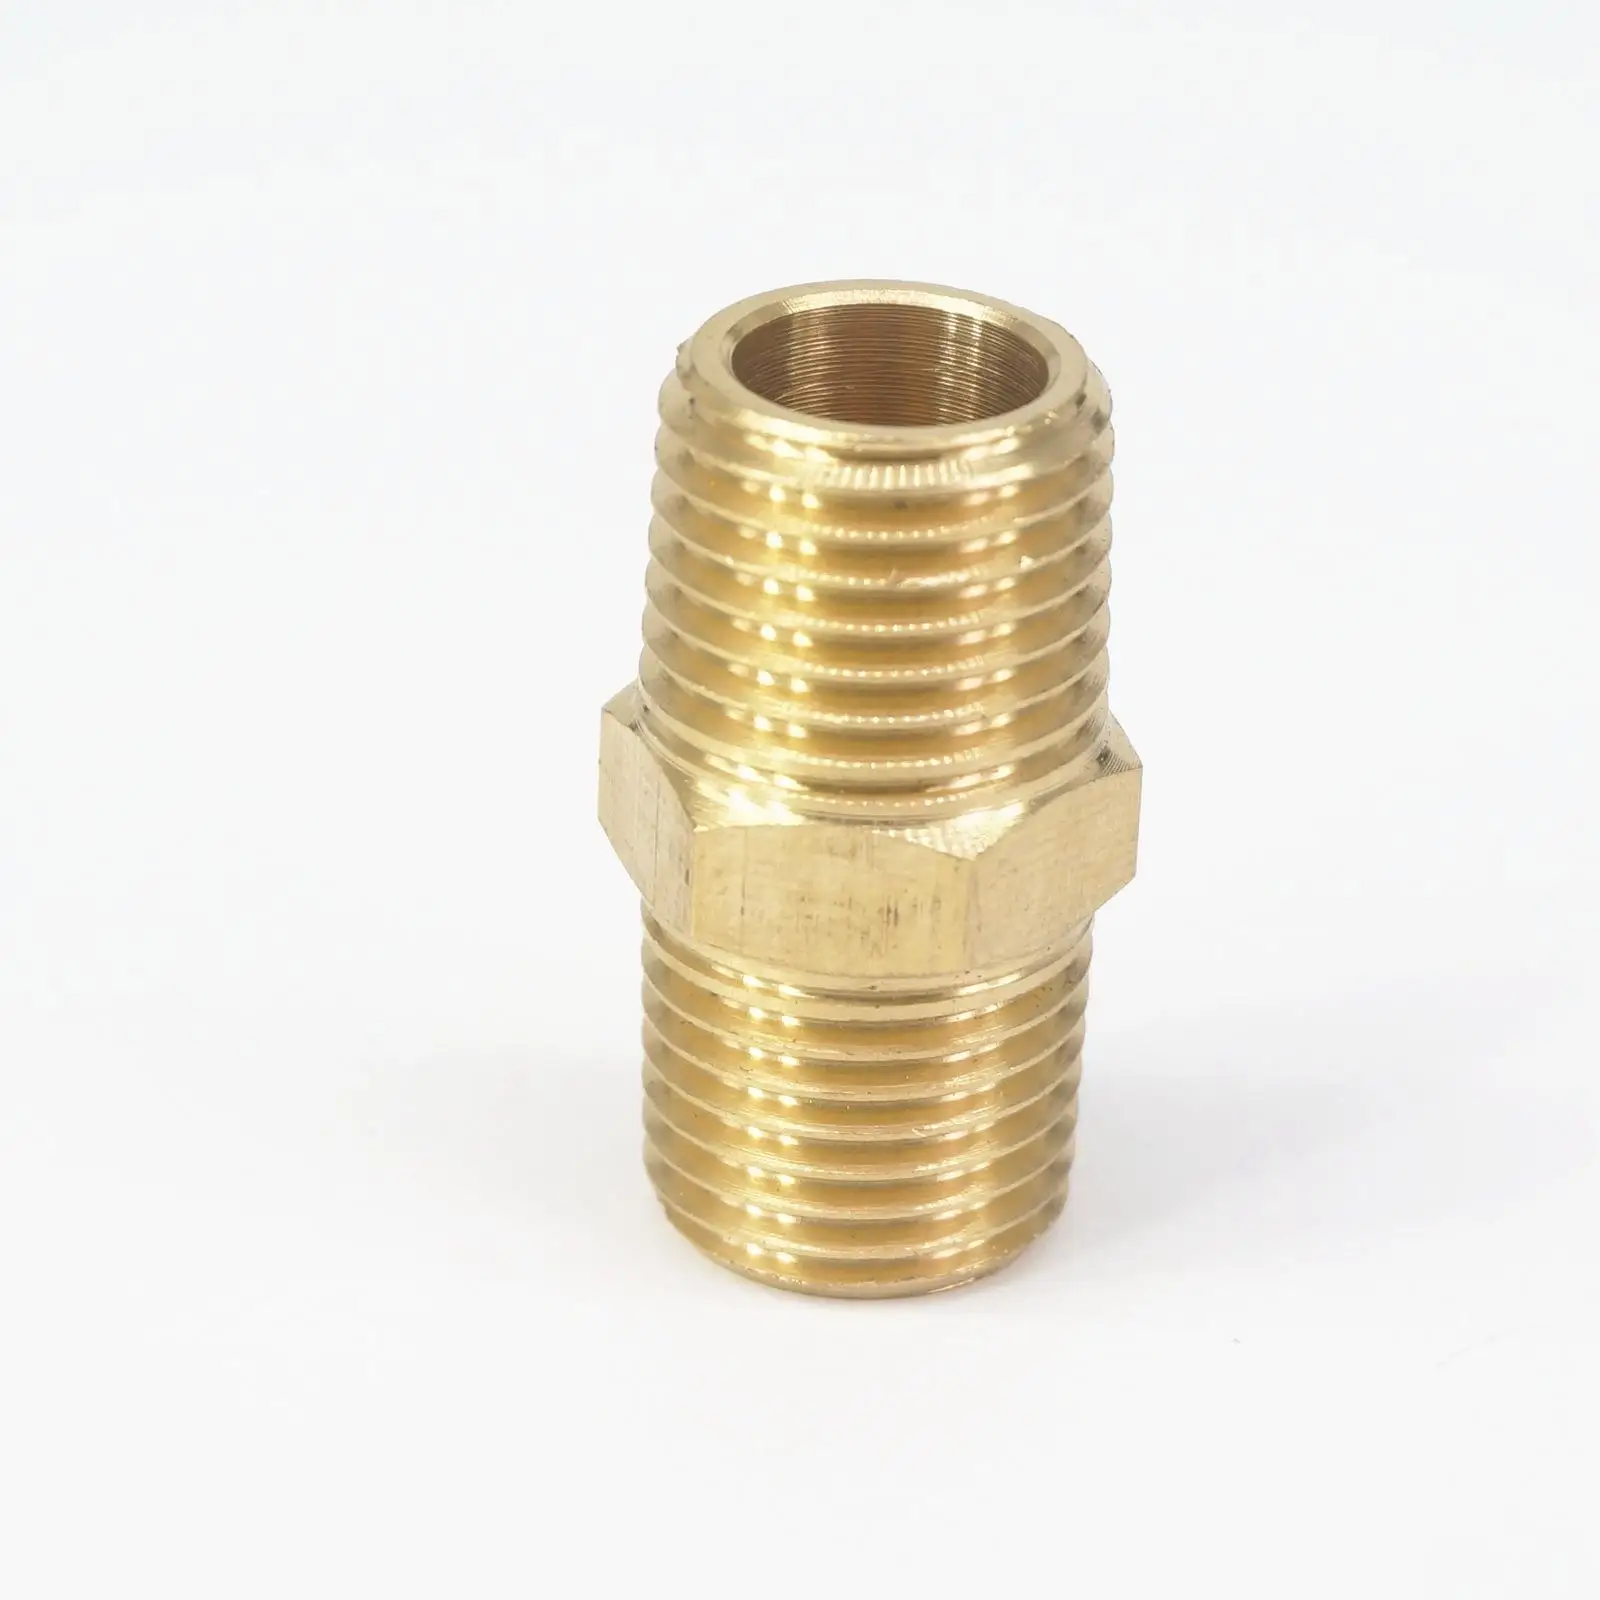 NEW Plumbing Brass BSP Threaded fittings NIPPLE 1/4" Close BSP Taper 